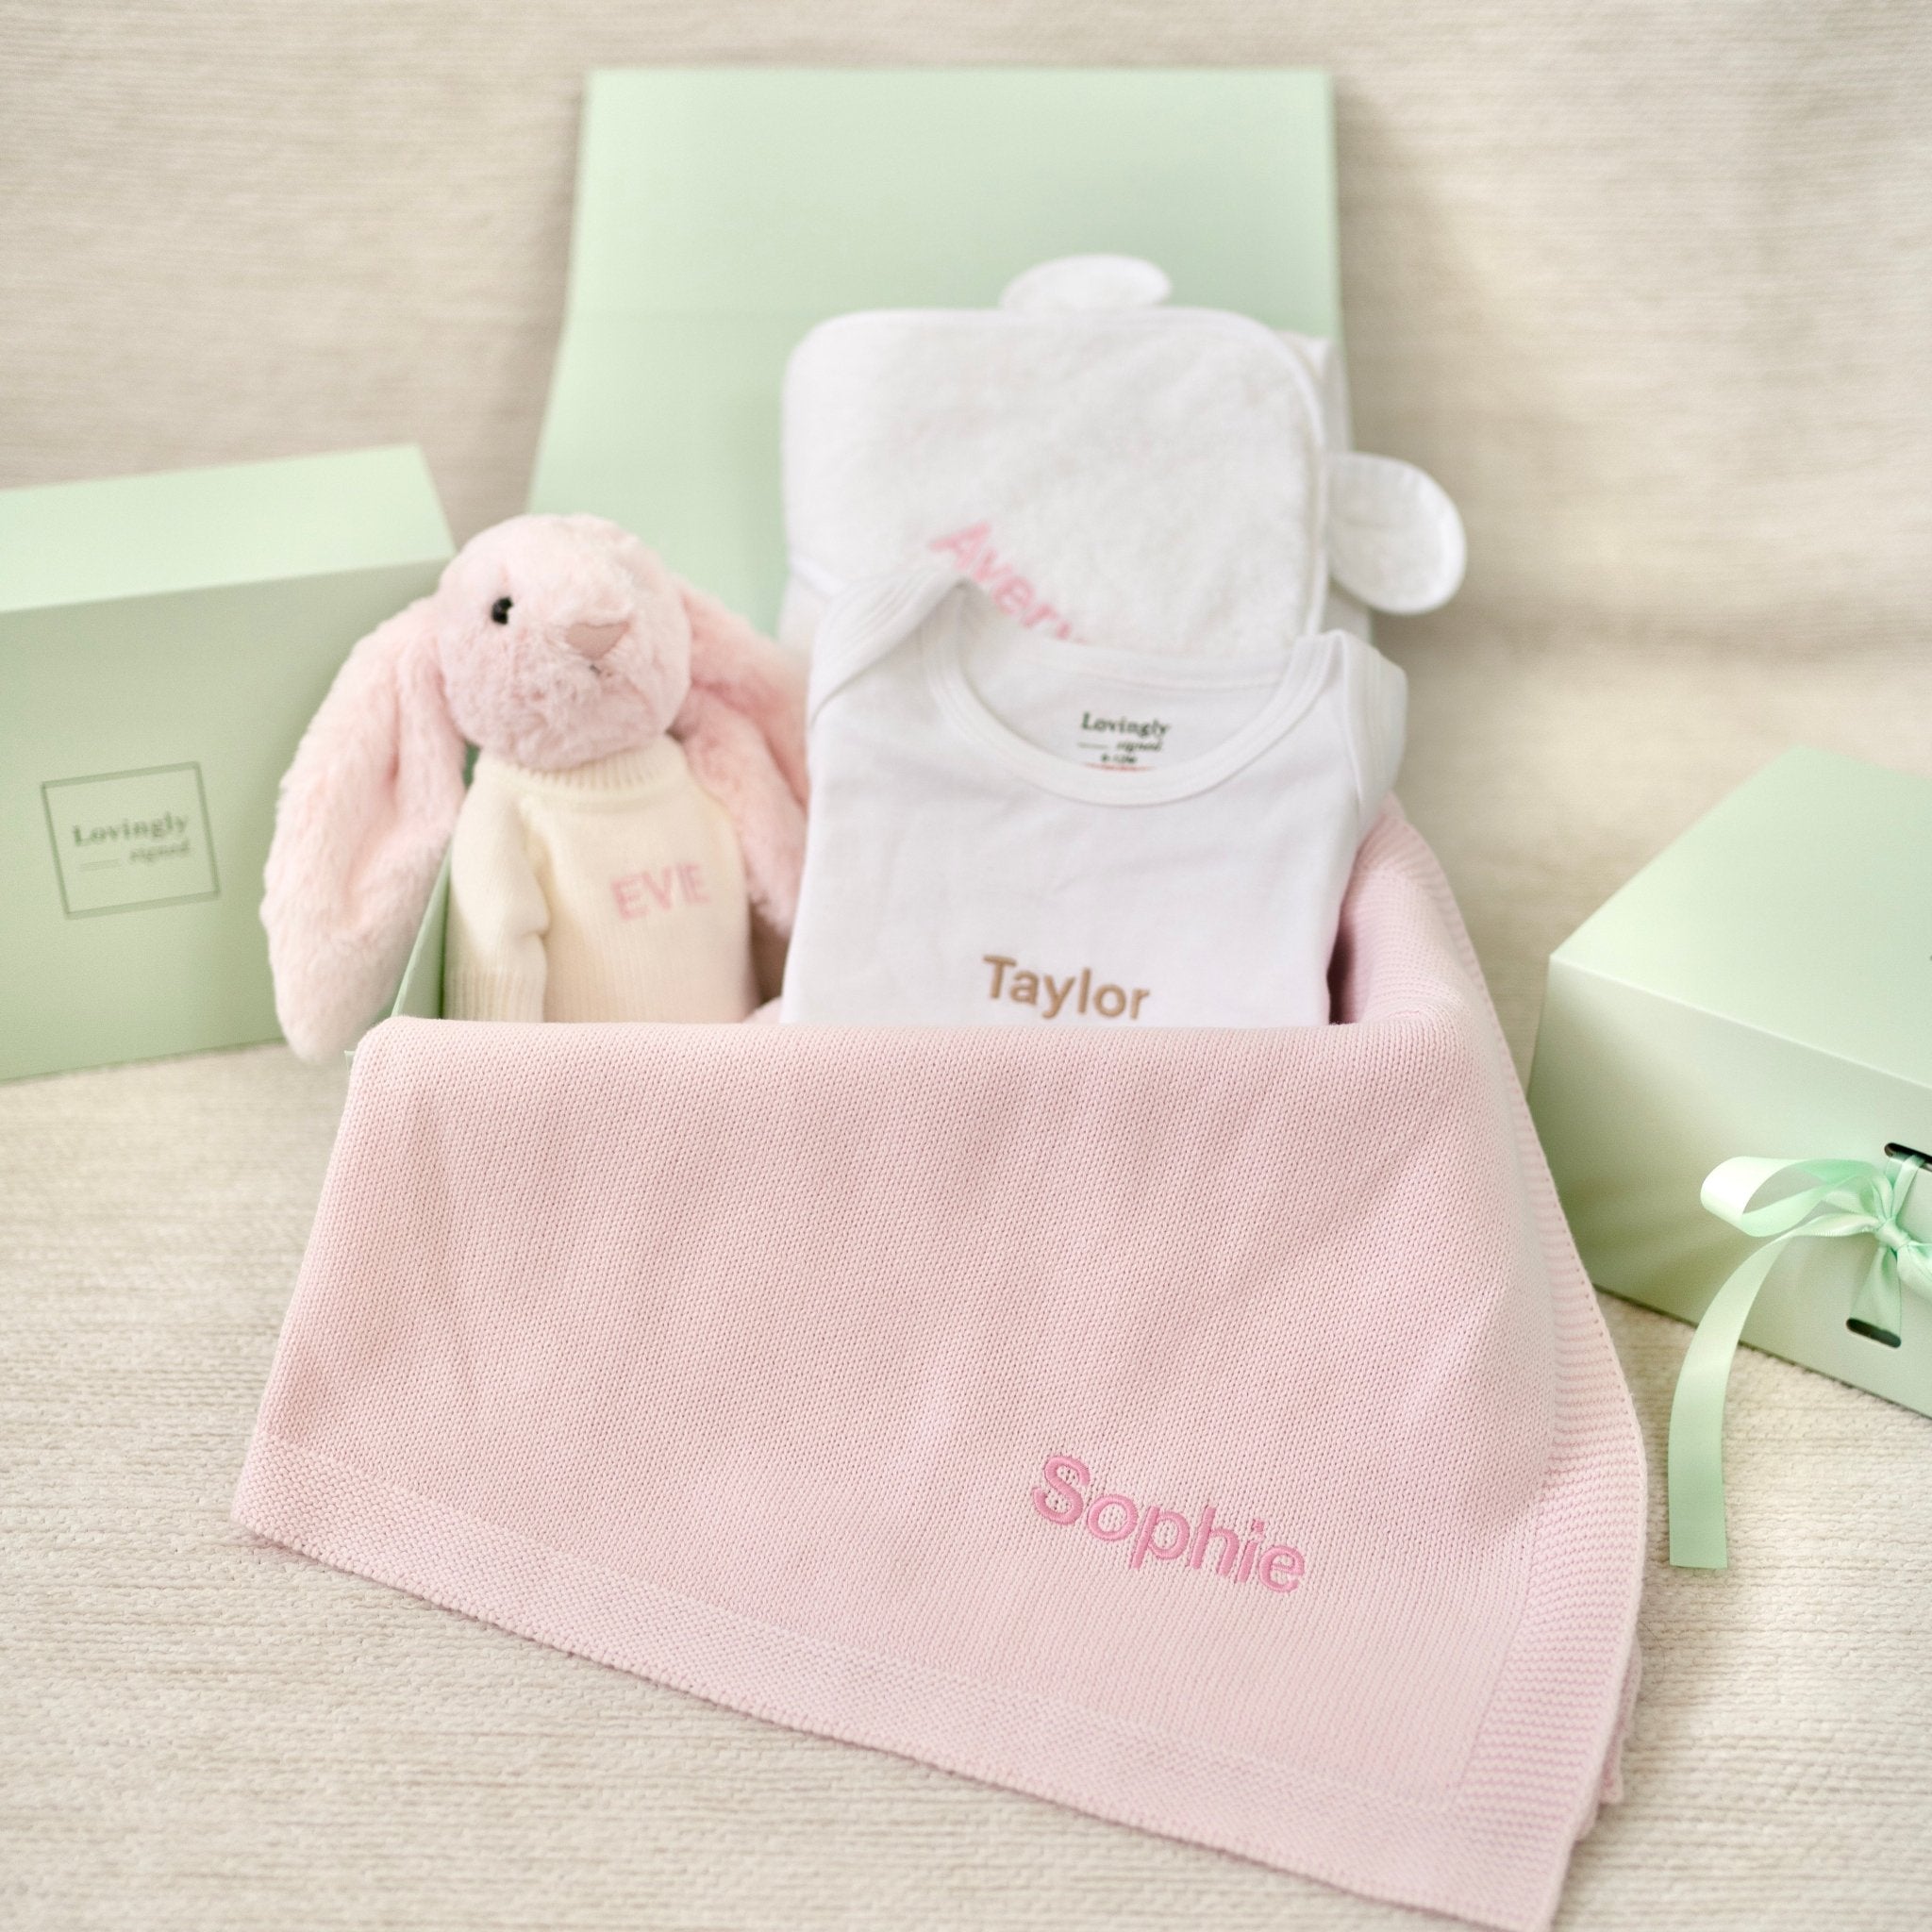 Personalised Baby Gifts & Keepsakes, New Parent Gift | PhotoFairytales